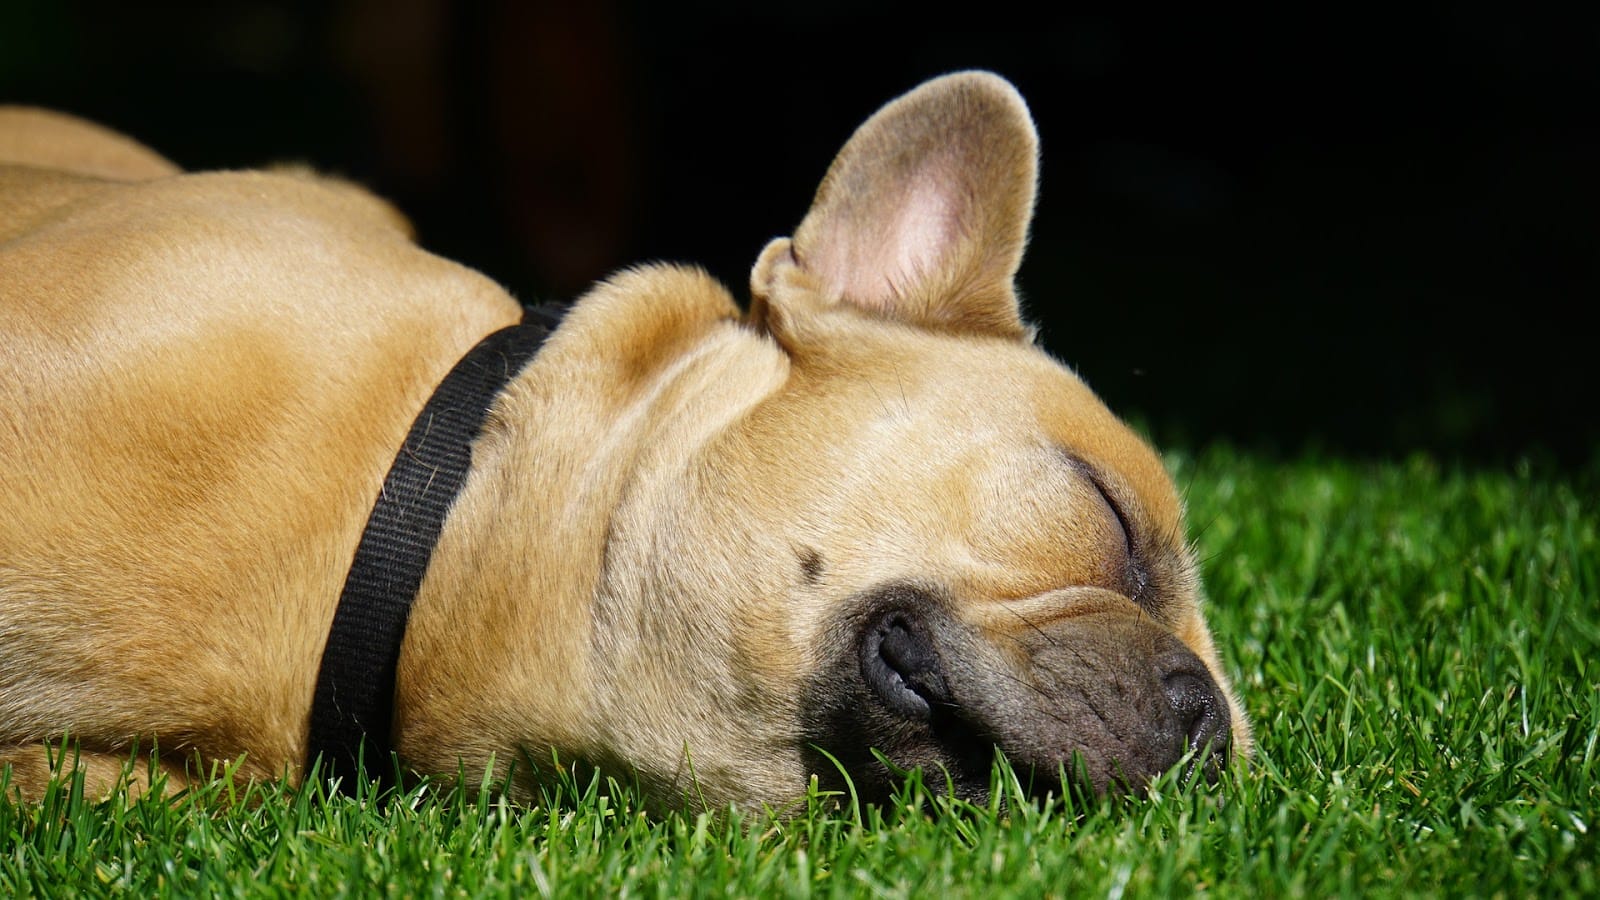 French bulldog fast asleep